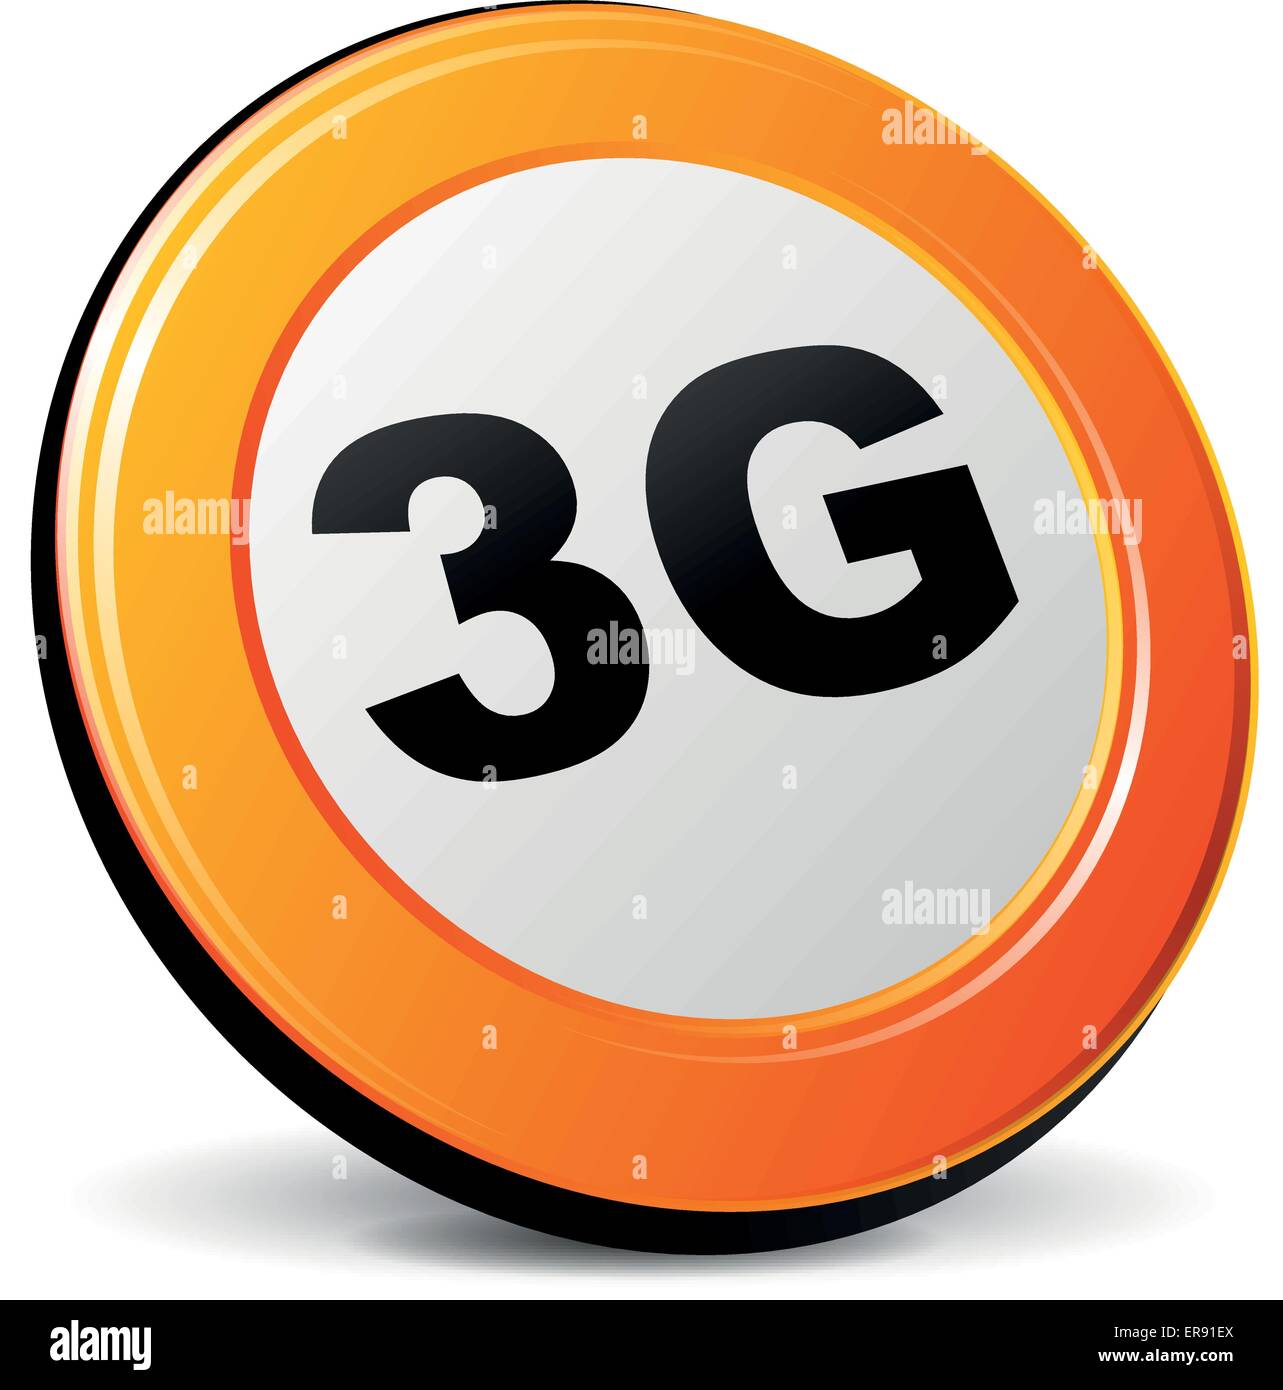 Vector illustration of orange 3d 3g icon Stock Vector